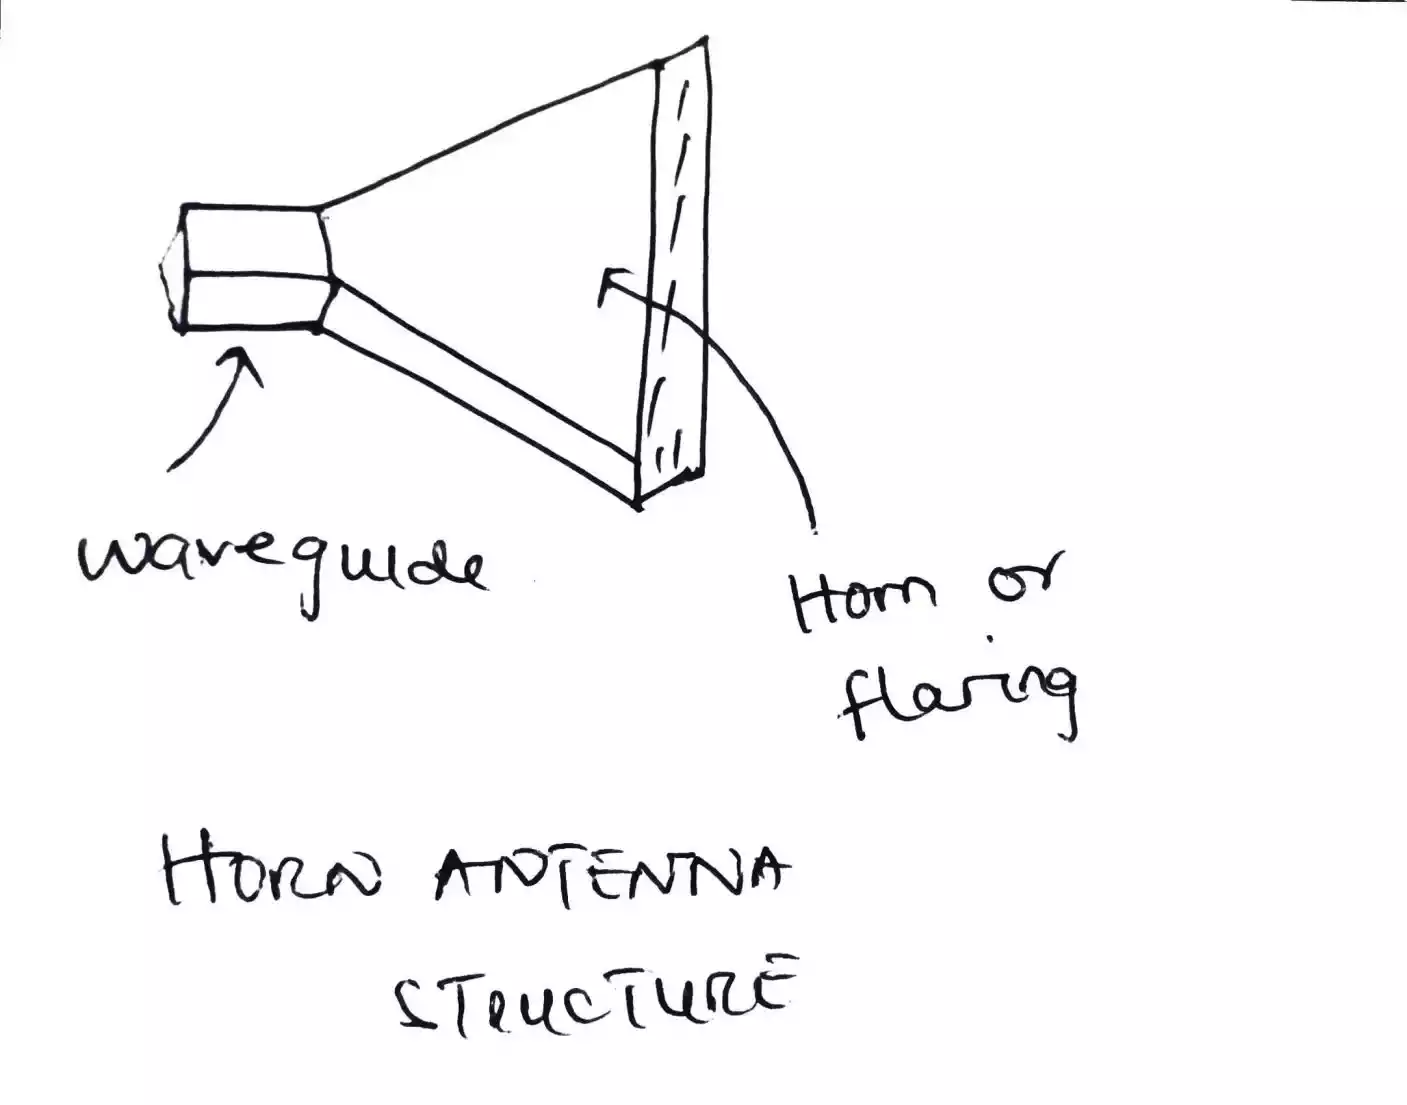 horn antenna structure